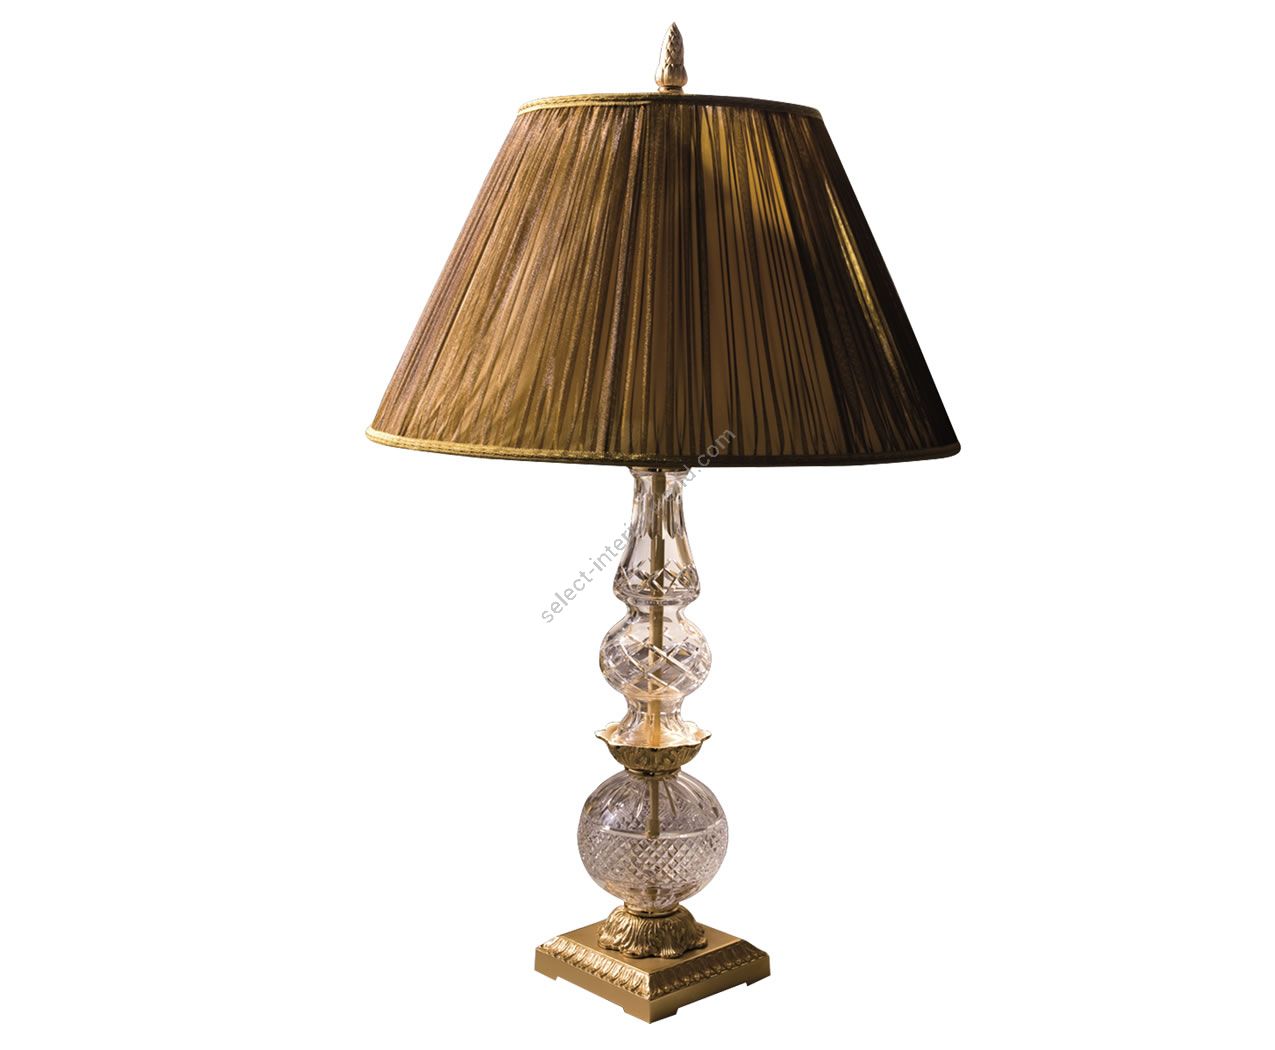 Mariner / Table Lamp / Royal Heritage 19901